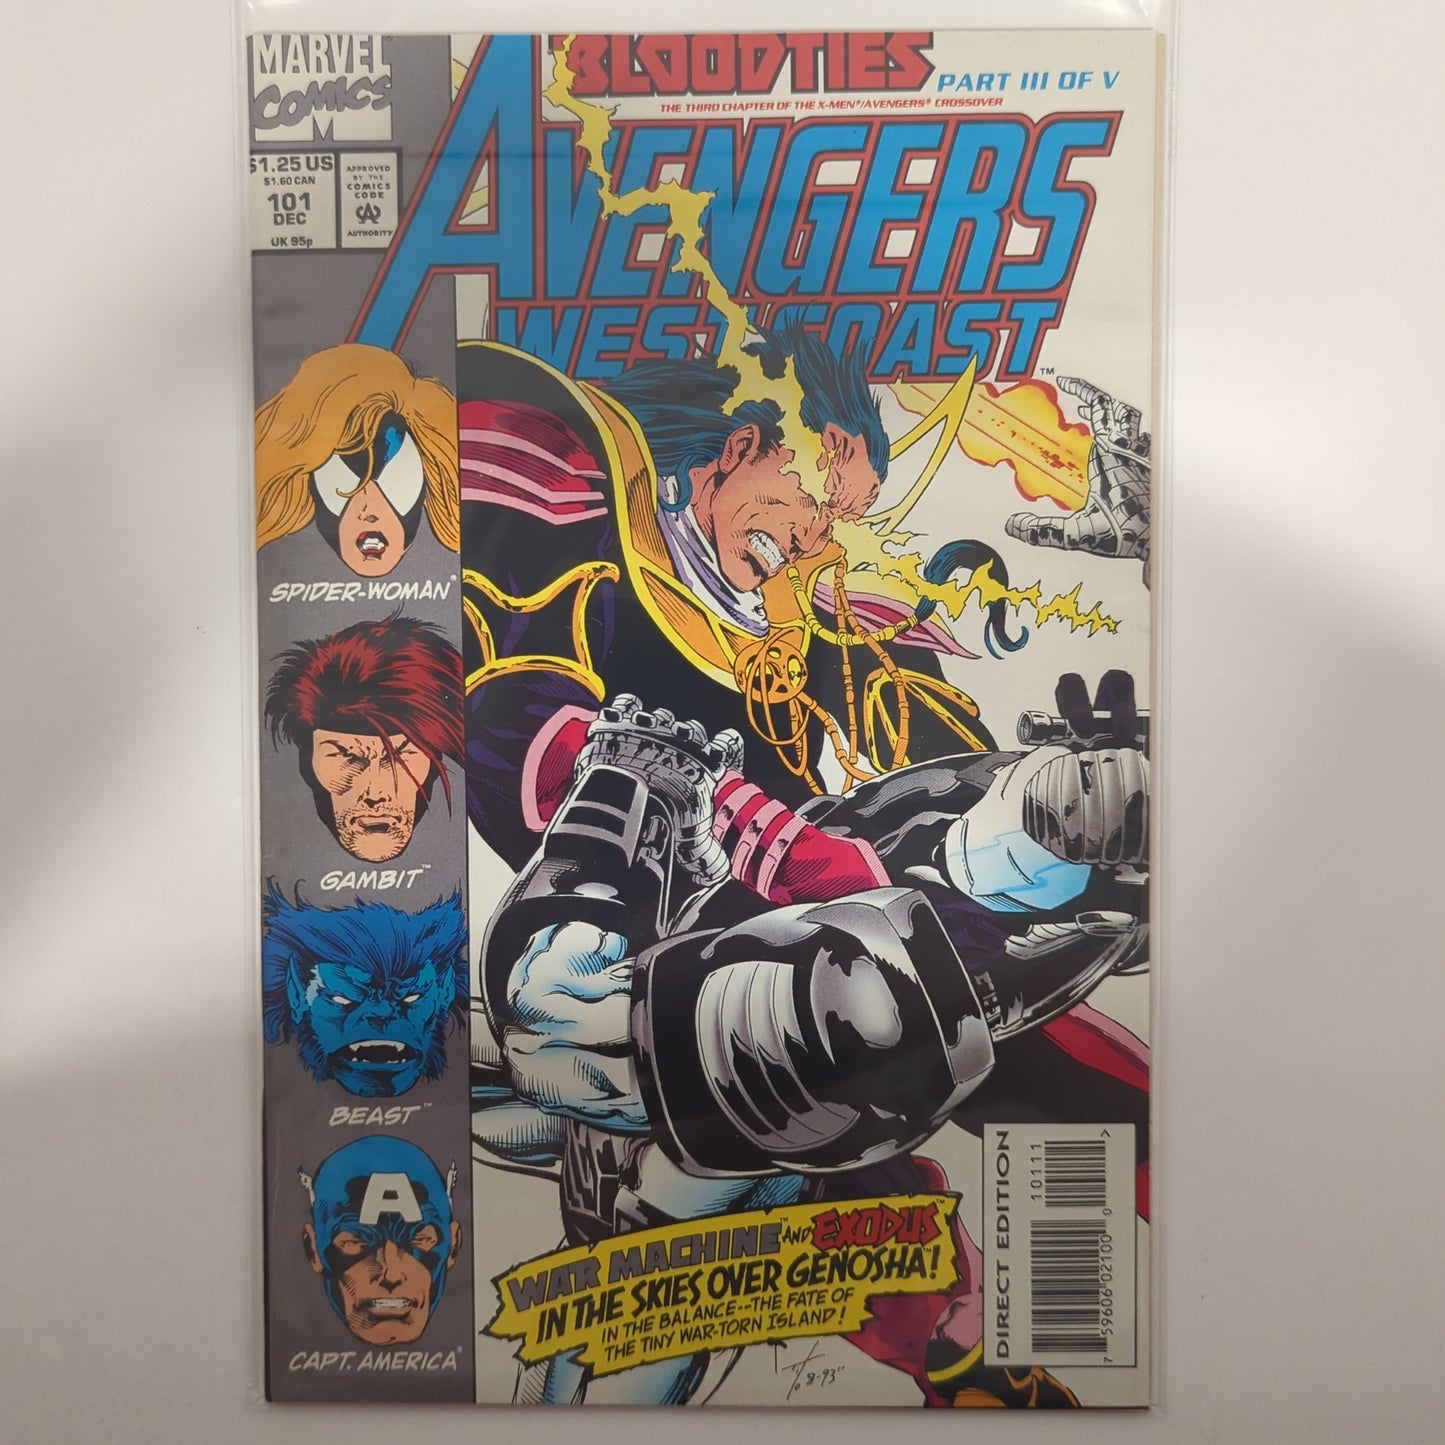 The West Coast Avengers #101